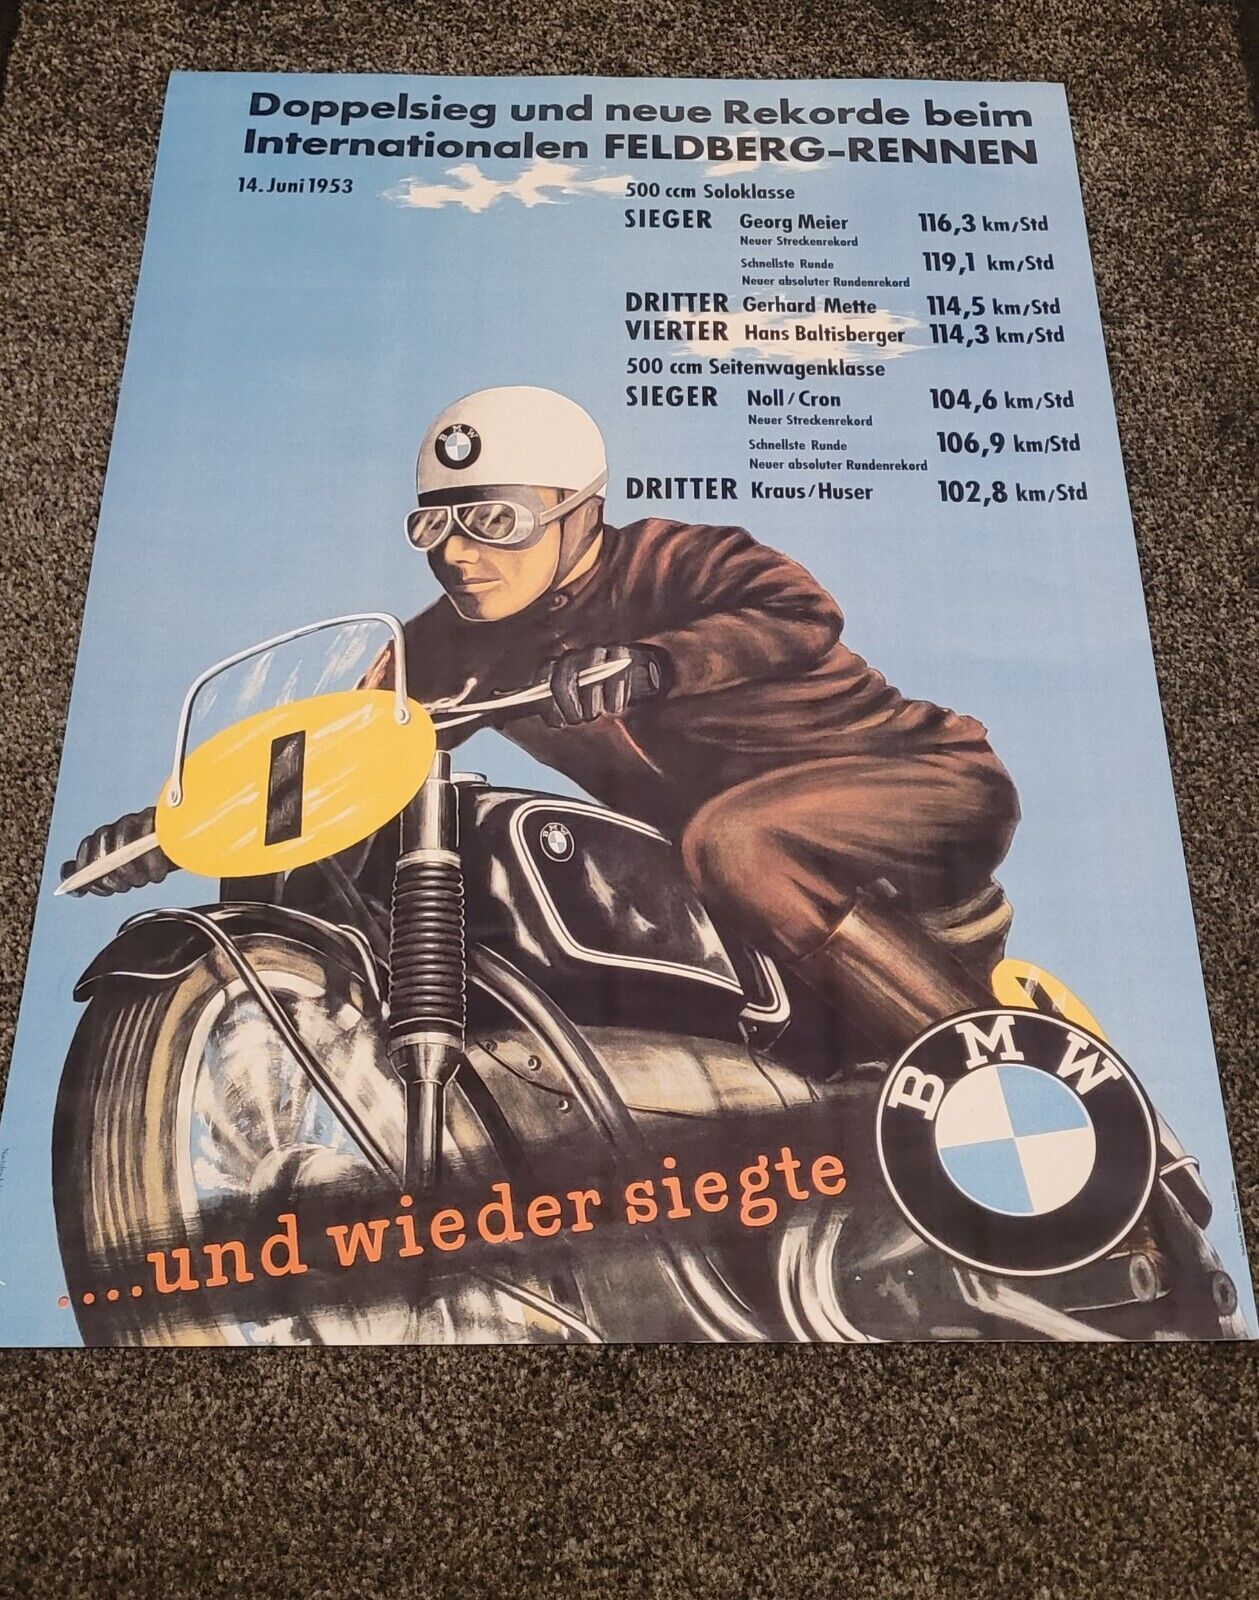 BMW Motorrad Vintage Poster Rare Feldberg Remen 1953 500cc A2 size quality repro